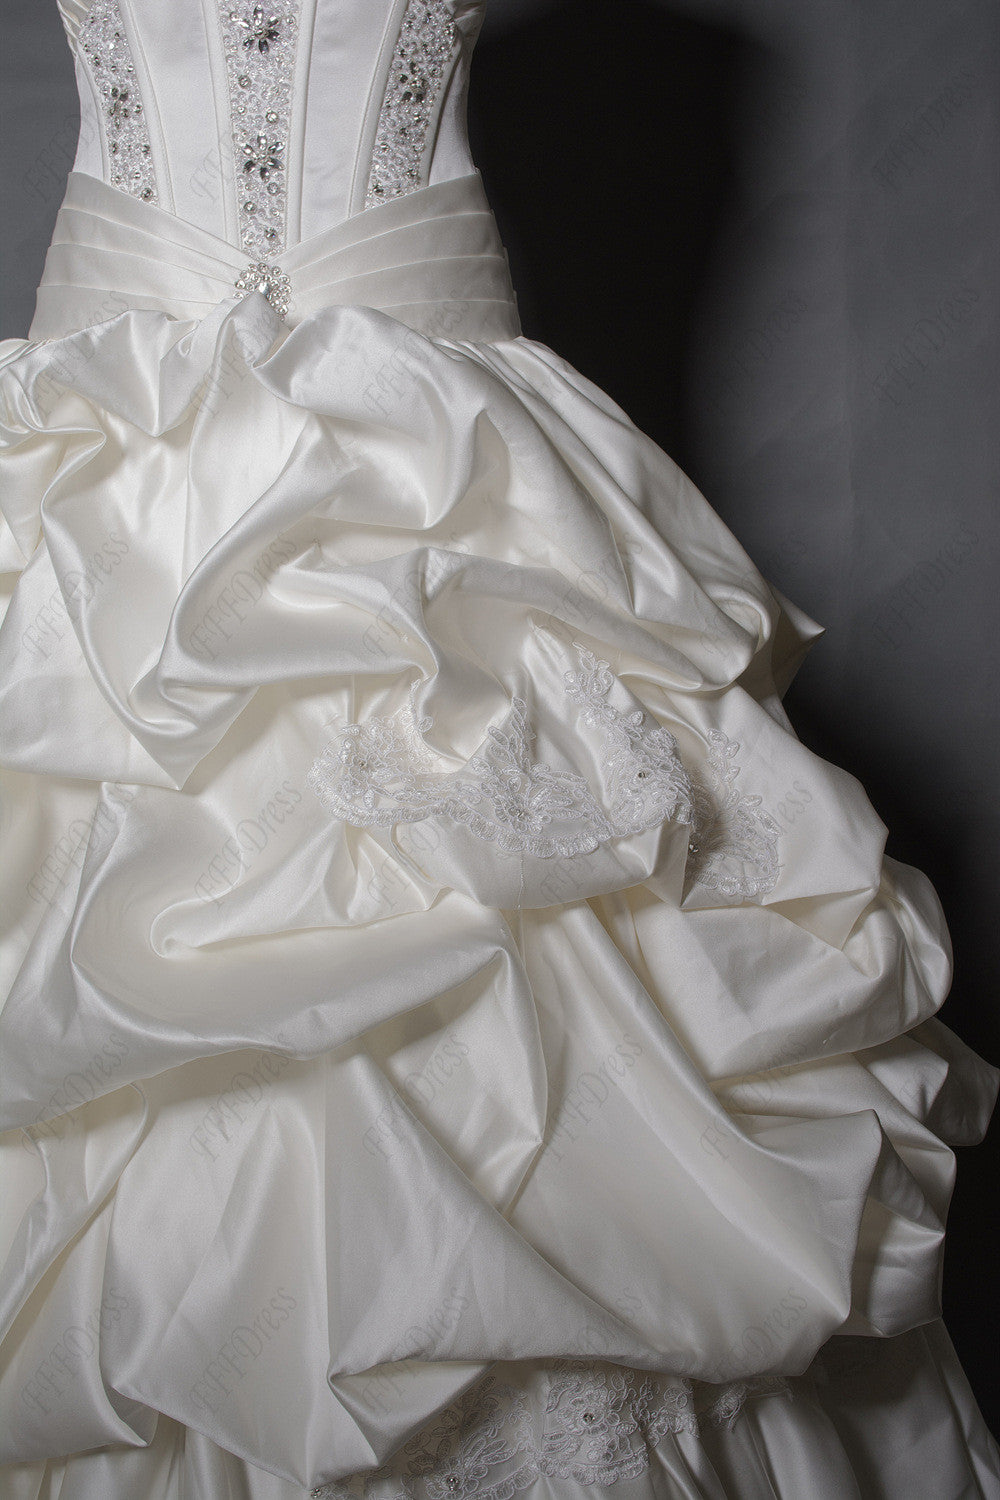 Beaded ballgown caught-up wedding dresses